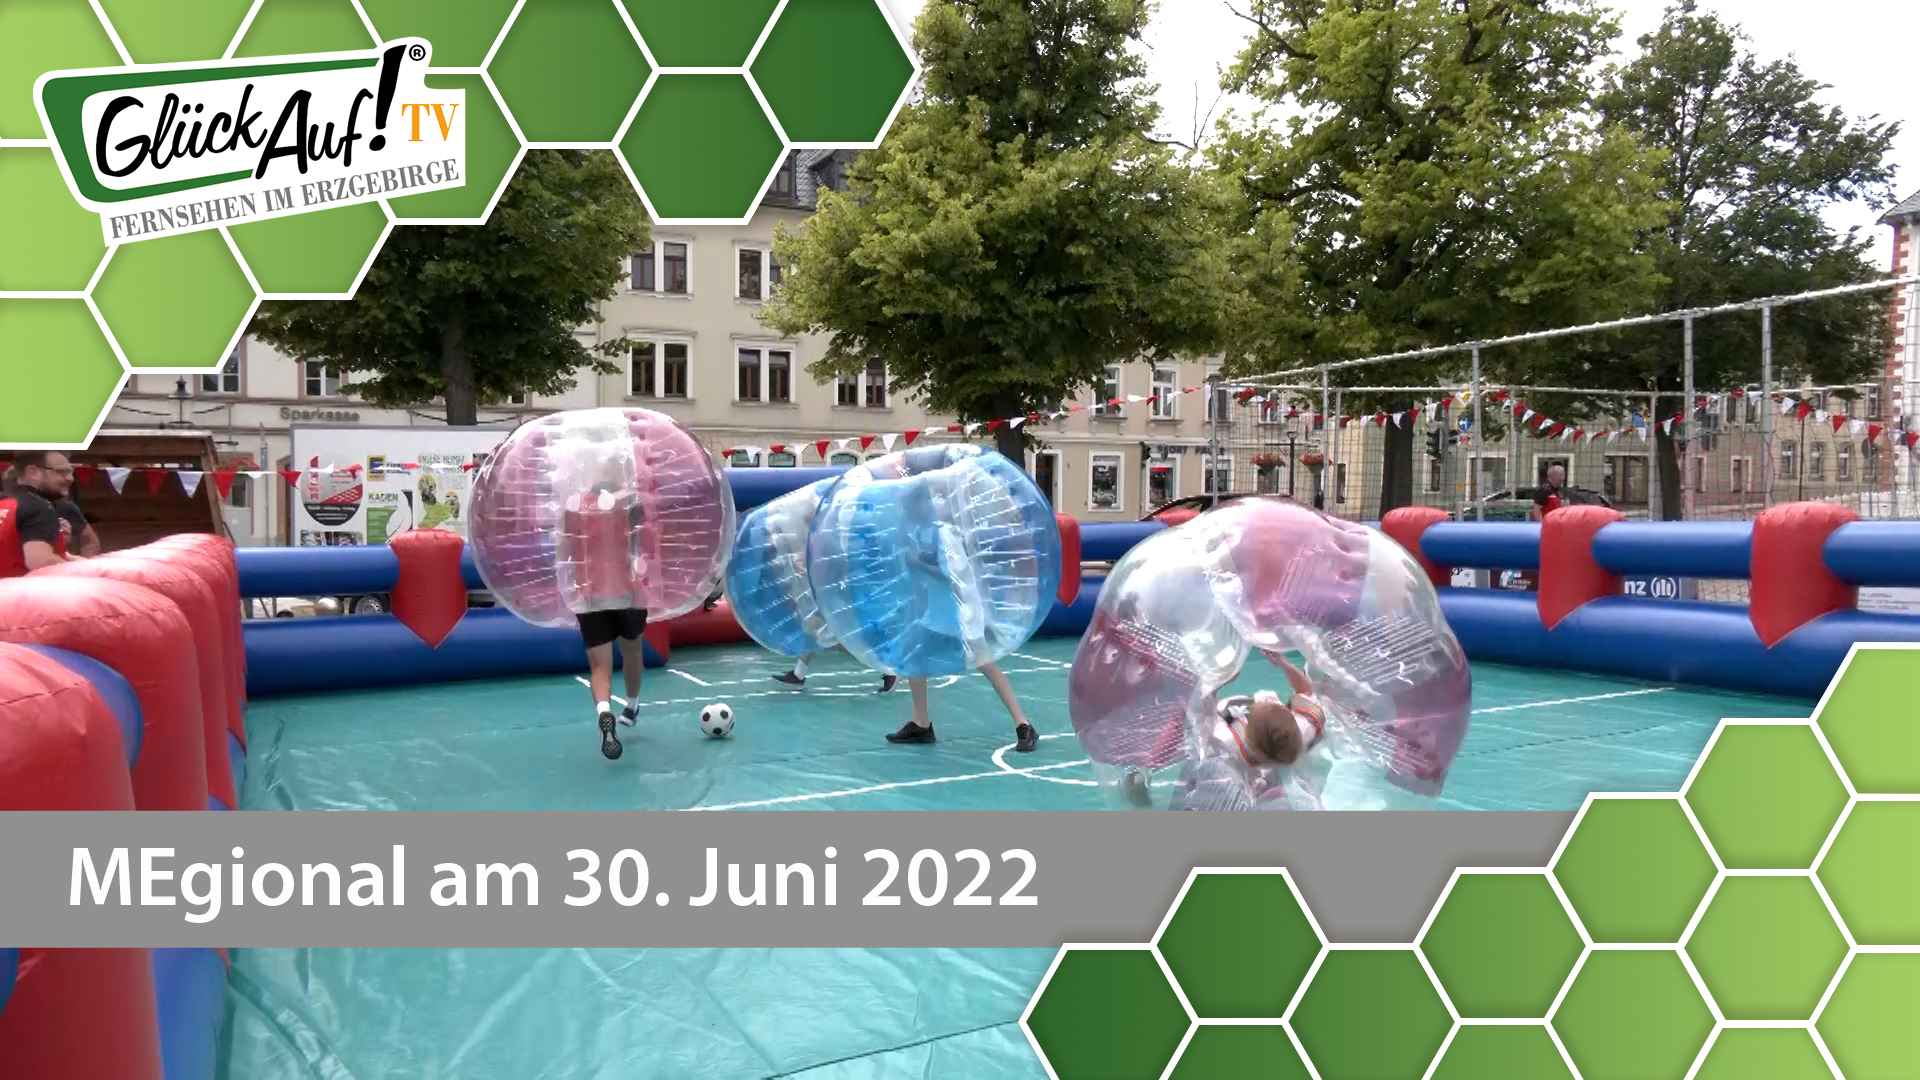 MEgional am 30. Juni 2022 - mit dem Sportwochenende in Marienberg